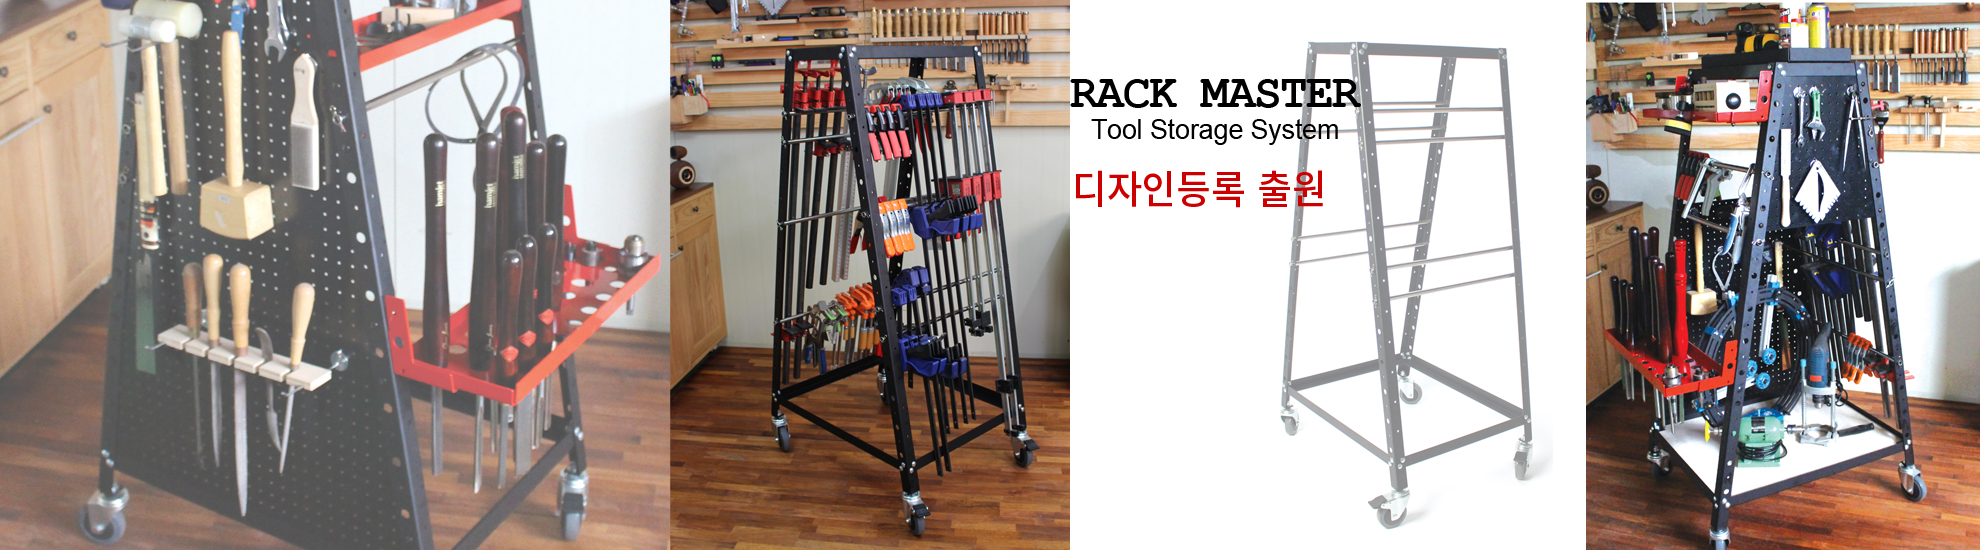 Rack Master Tool Storage System